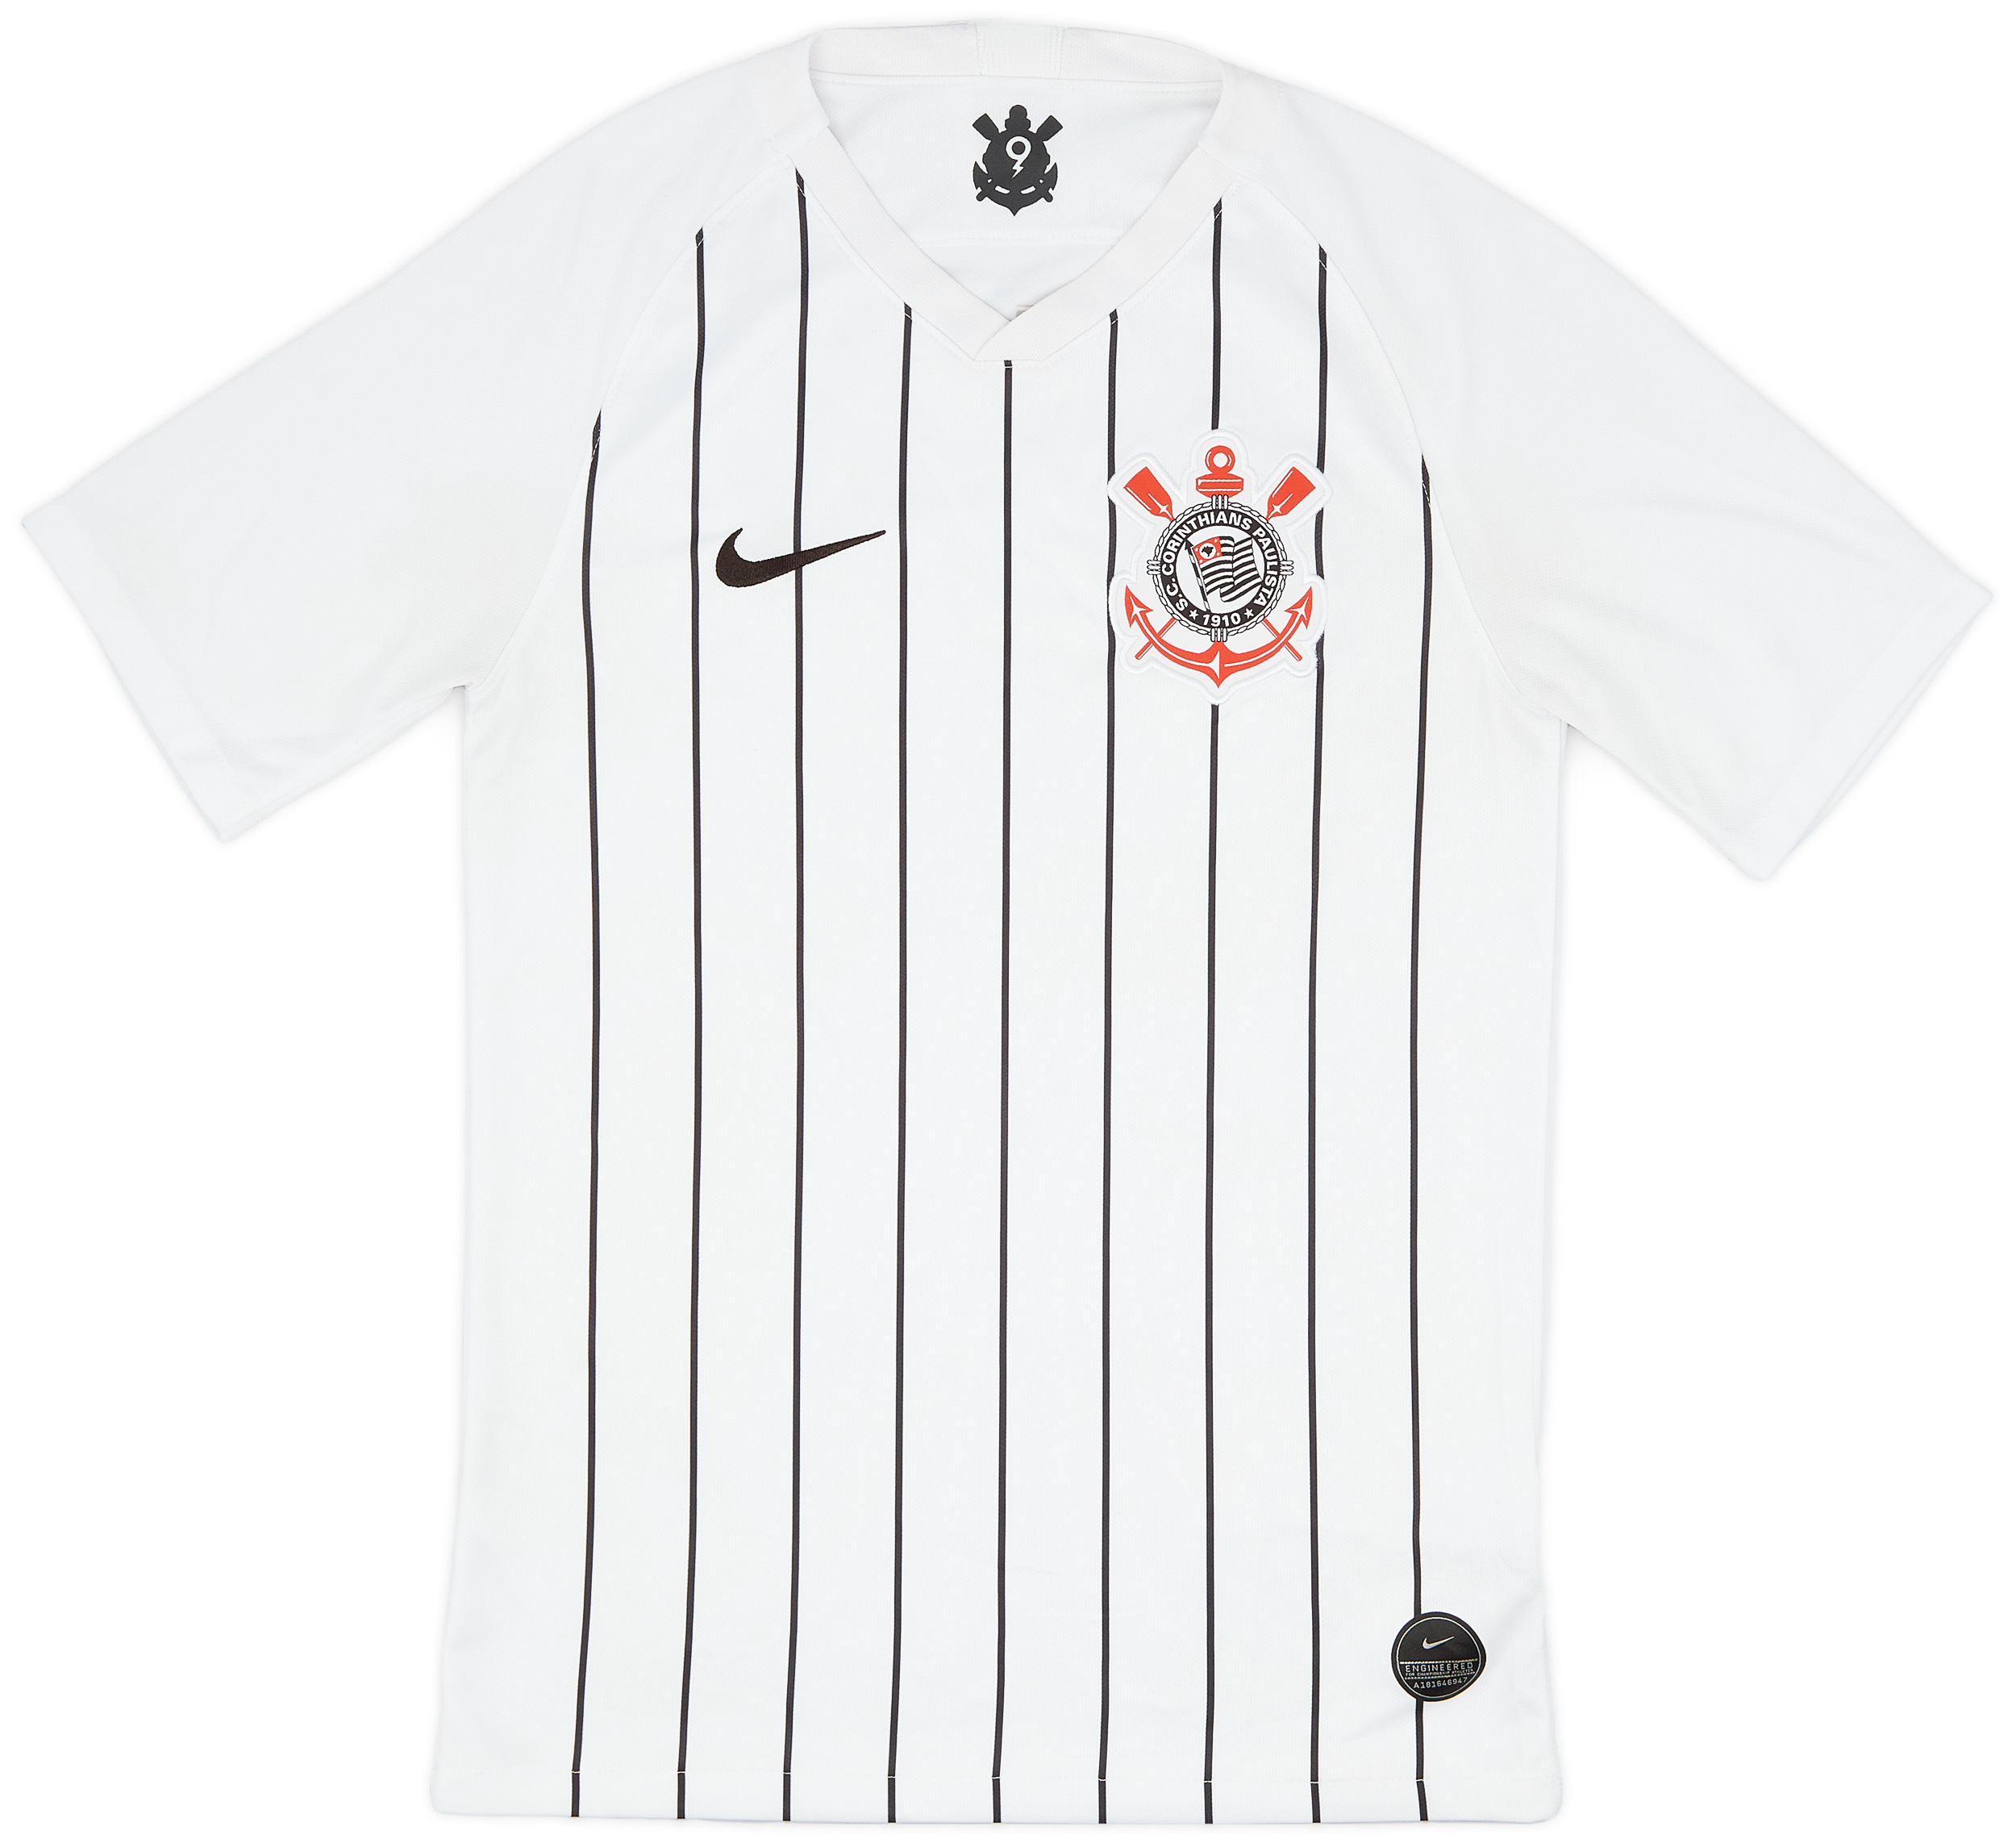 2019 Corinthians Home Shirt - 9/10 - ()